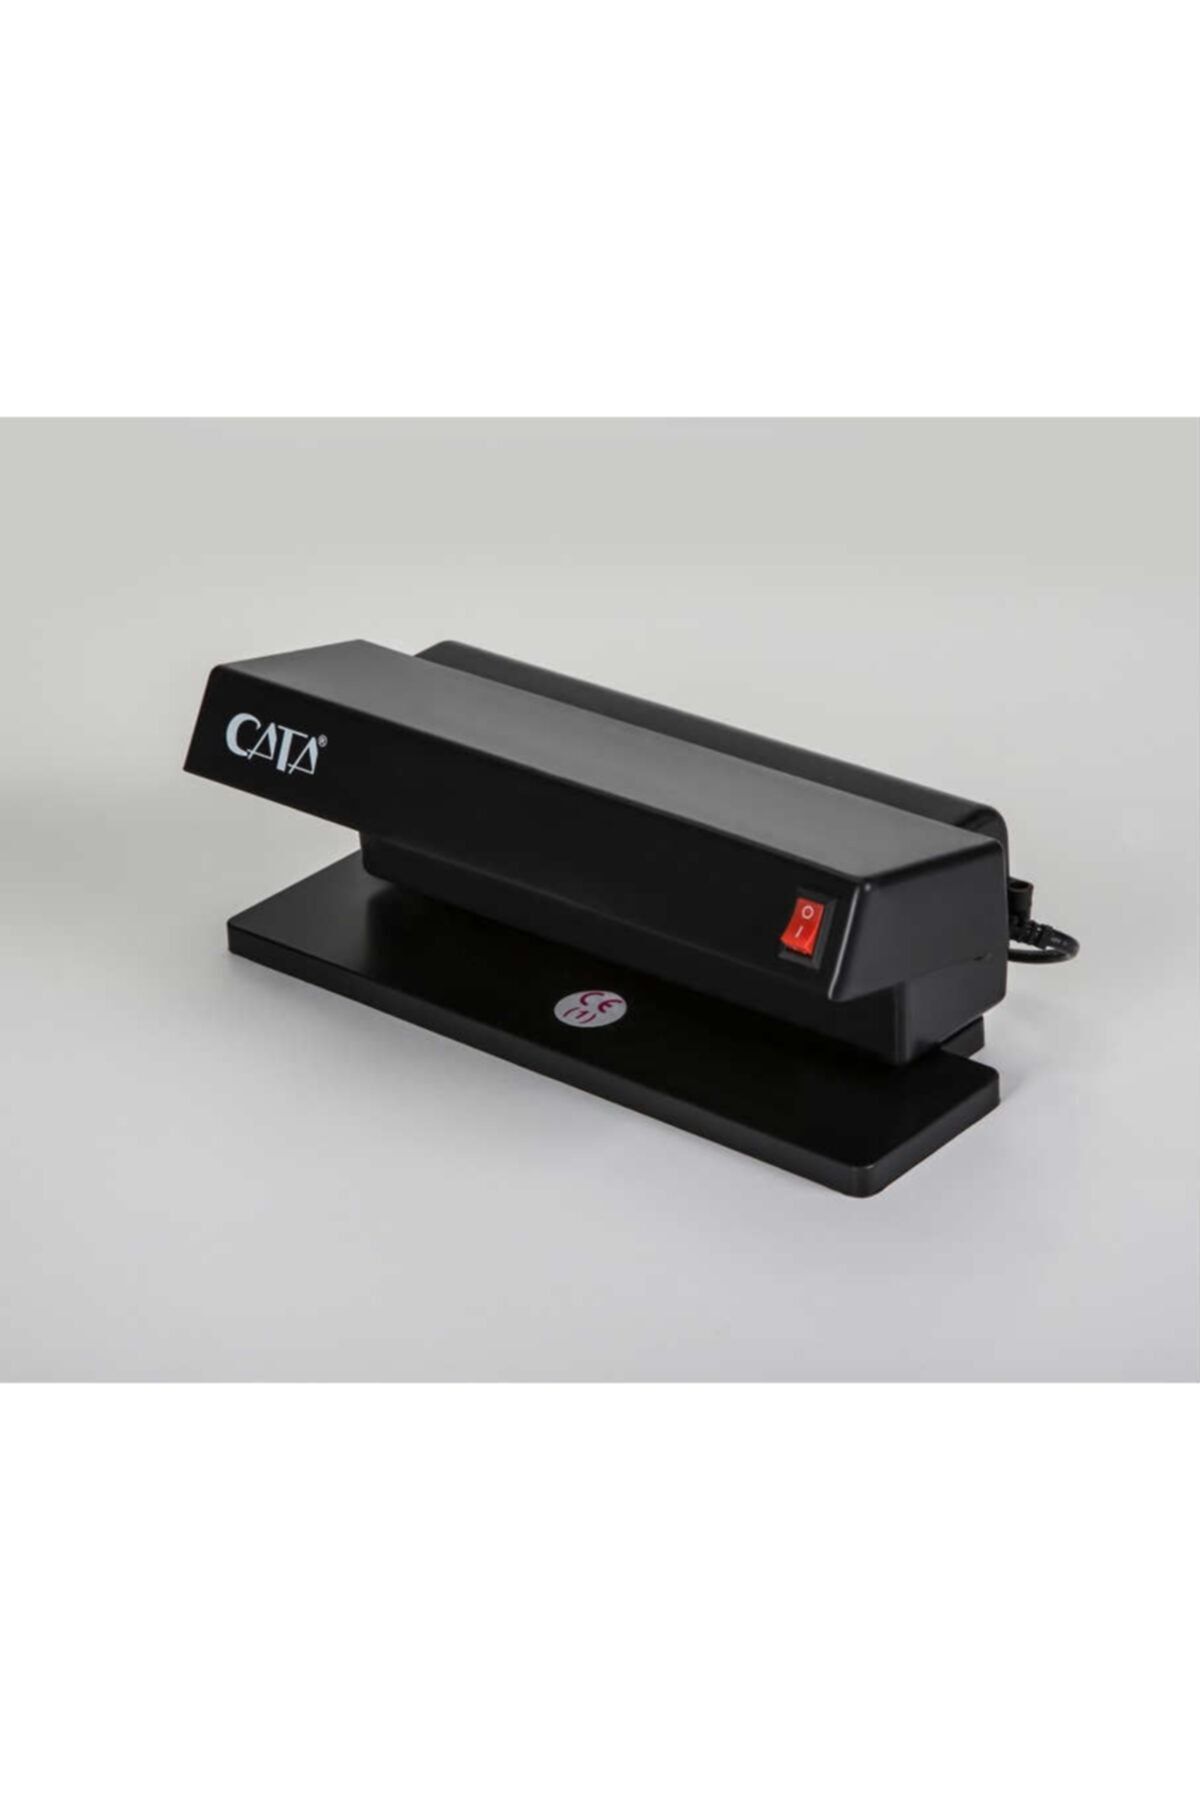 Cata Ct-9121 Para Kontrol Cihazı Ultraviole Işık